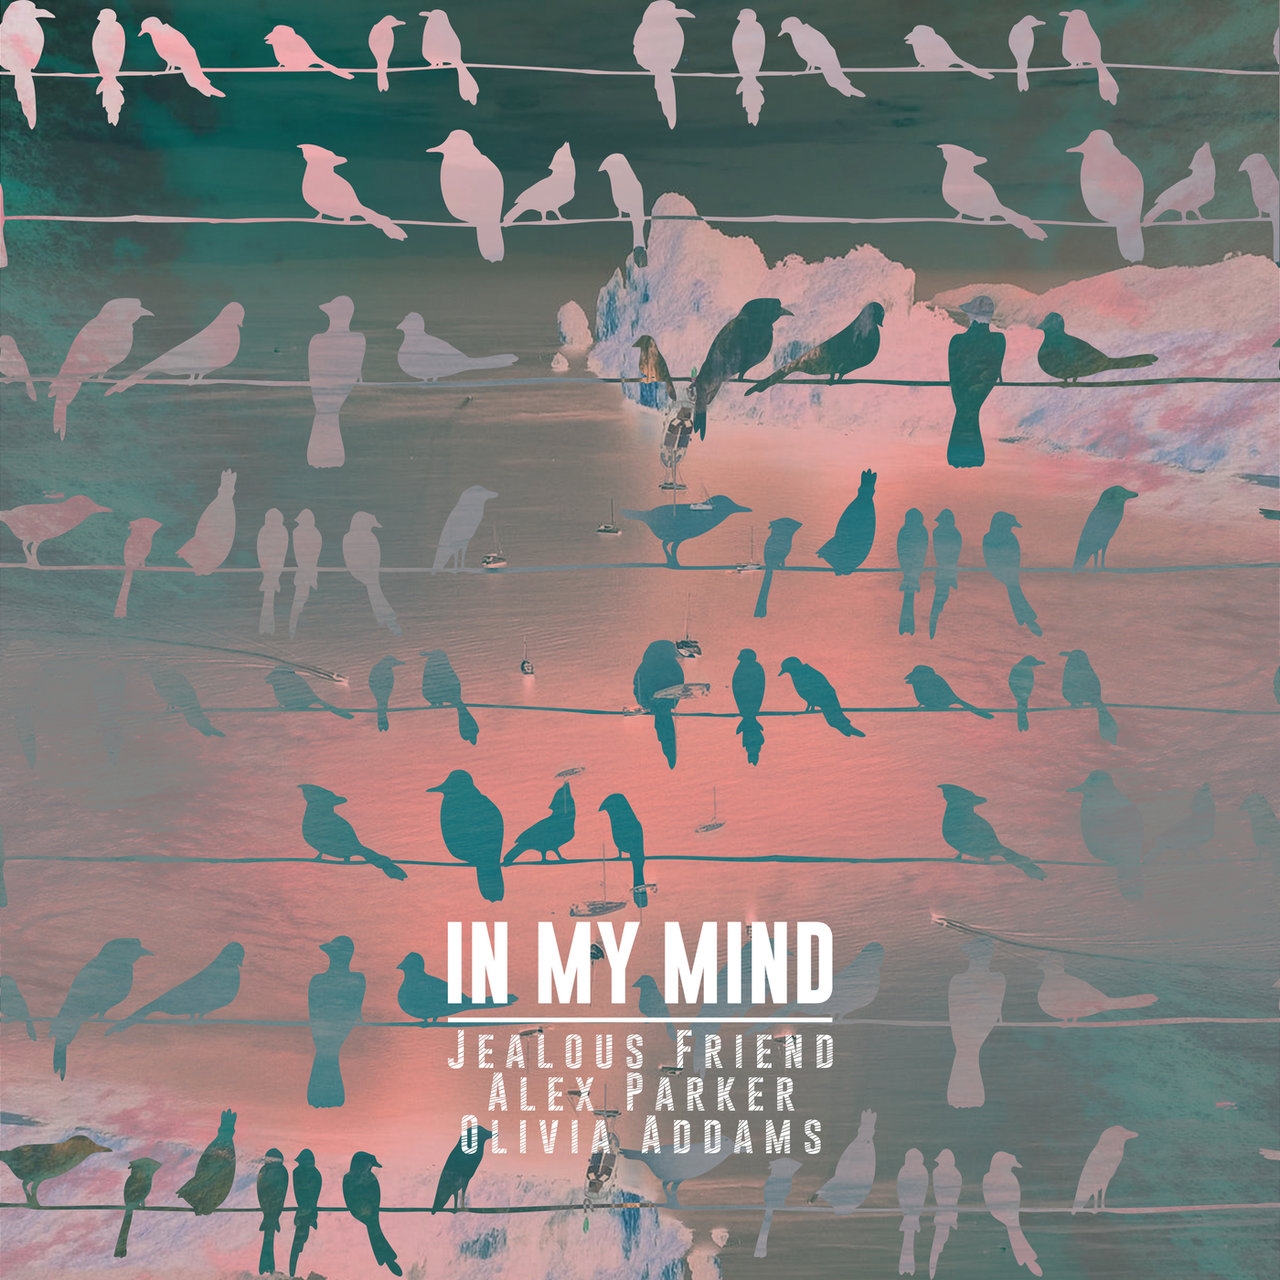 Jealous Friend, Alex Parker, & Olivia Addams — In My Mind cover artwork